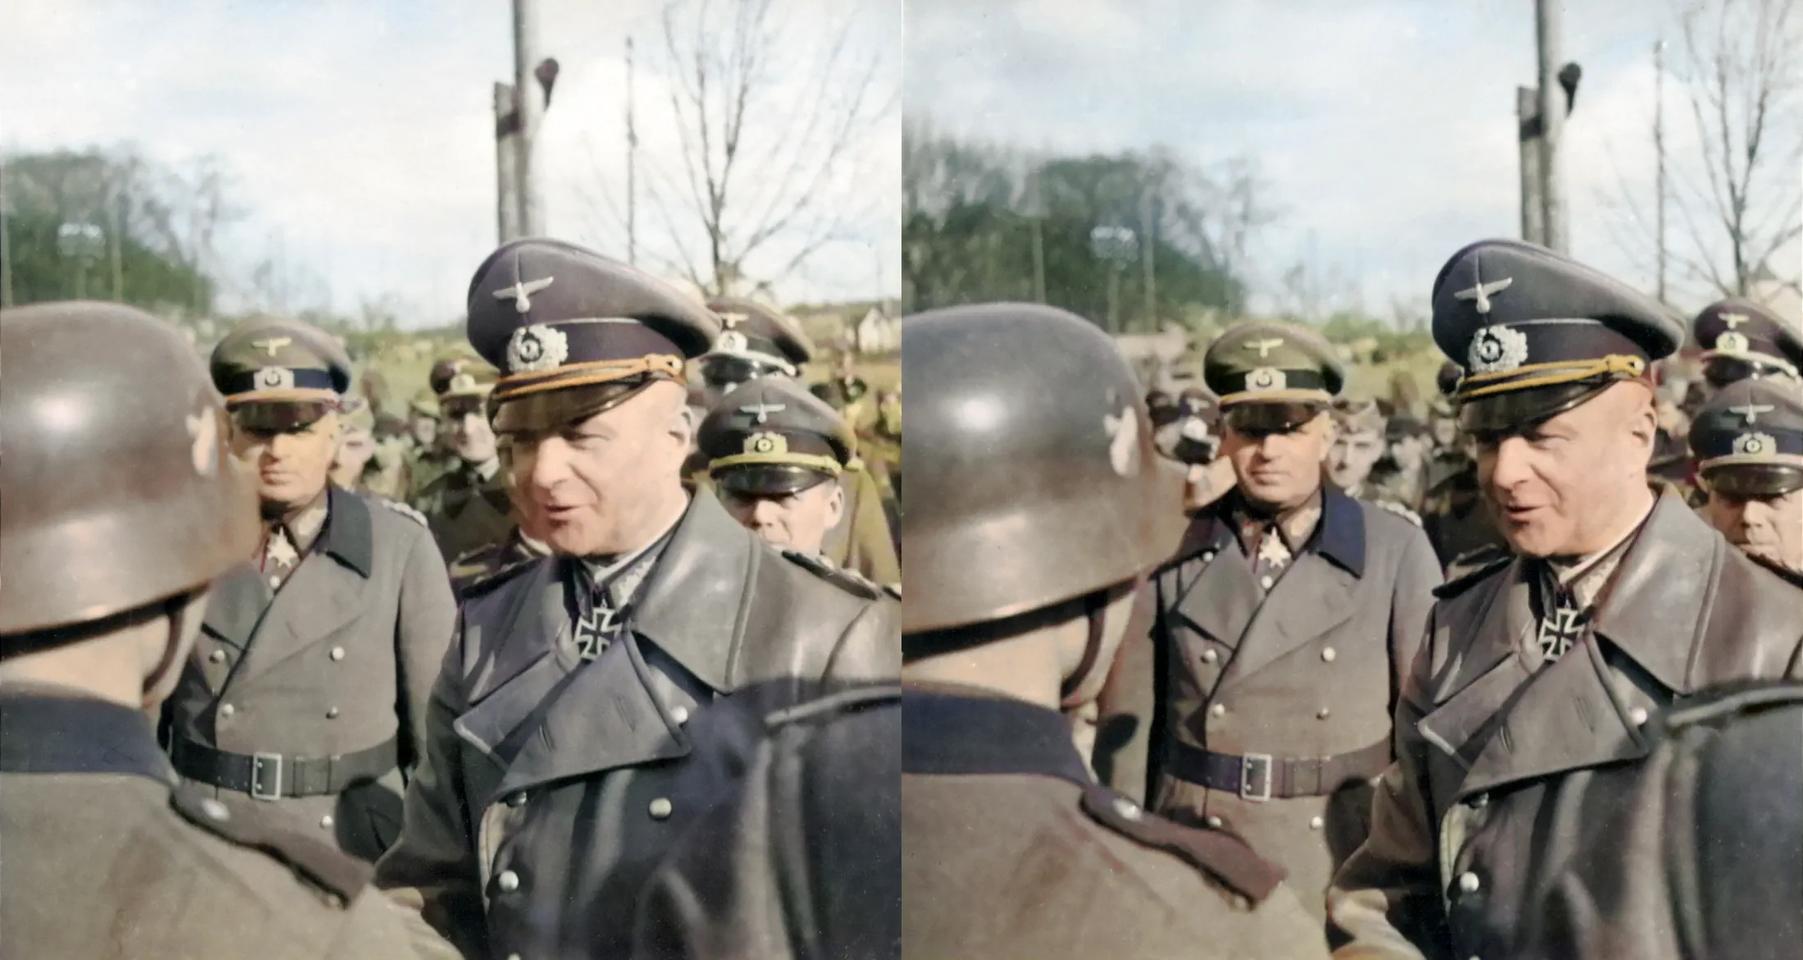 076 - German officer